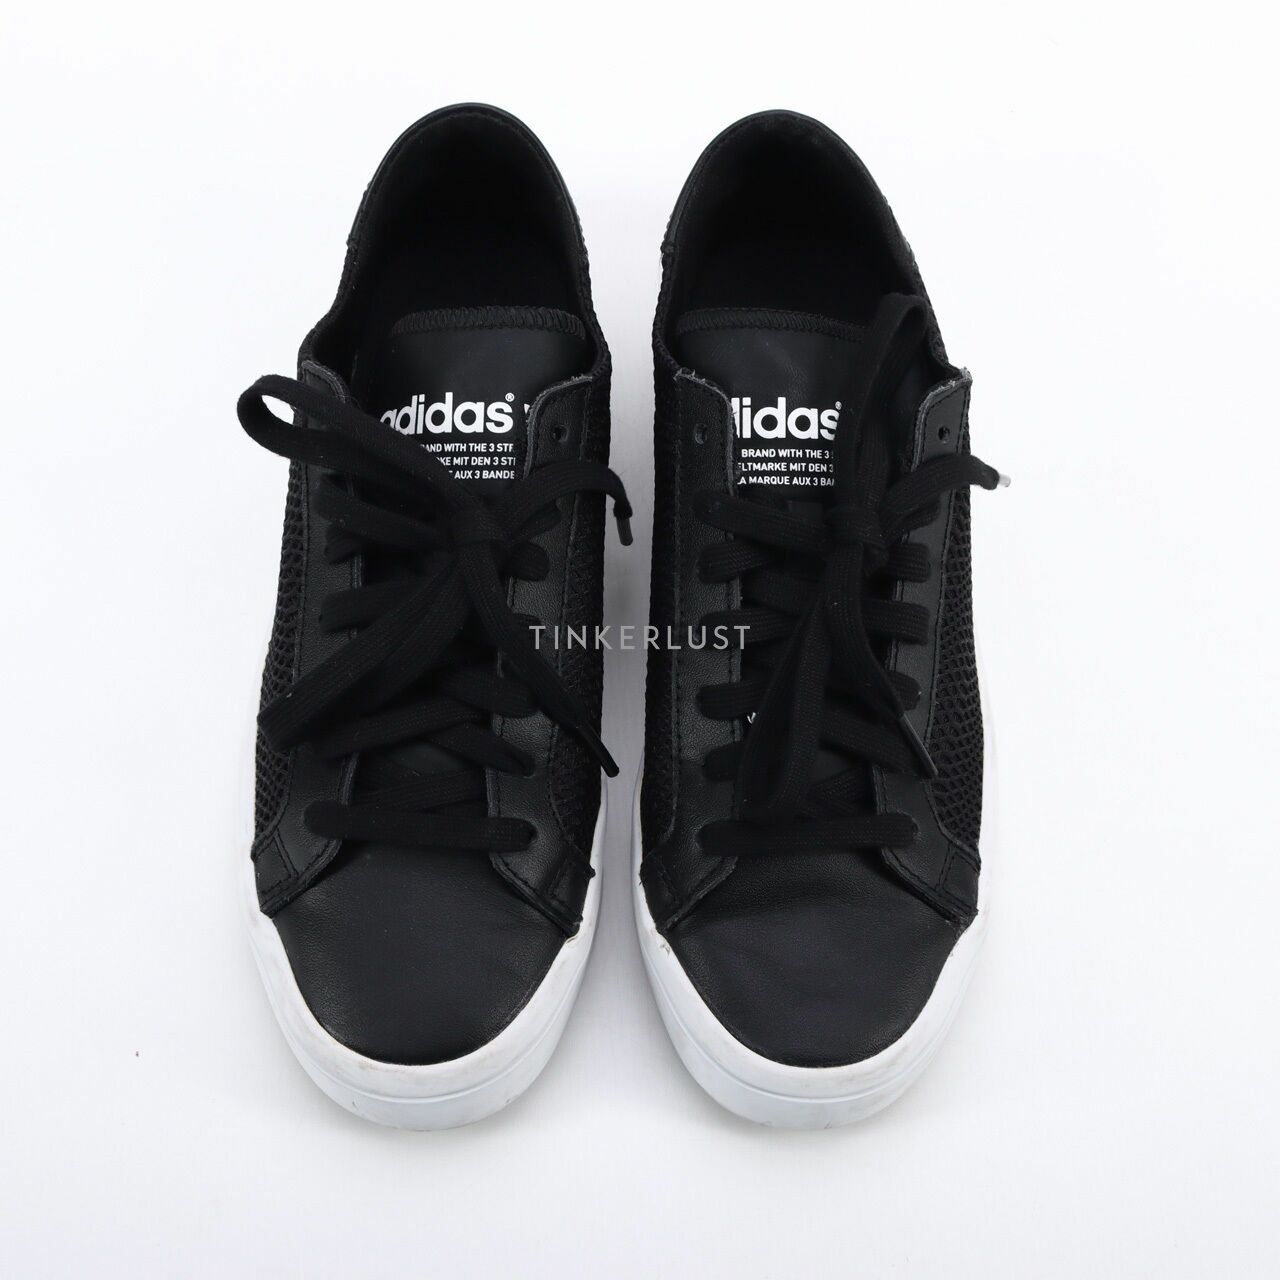 Adidas Court Vantage W S78902 Black Sneakers